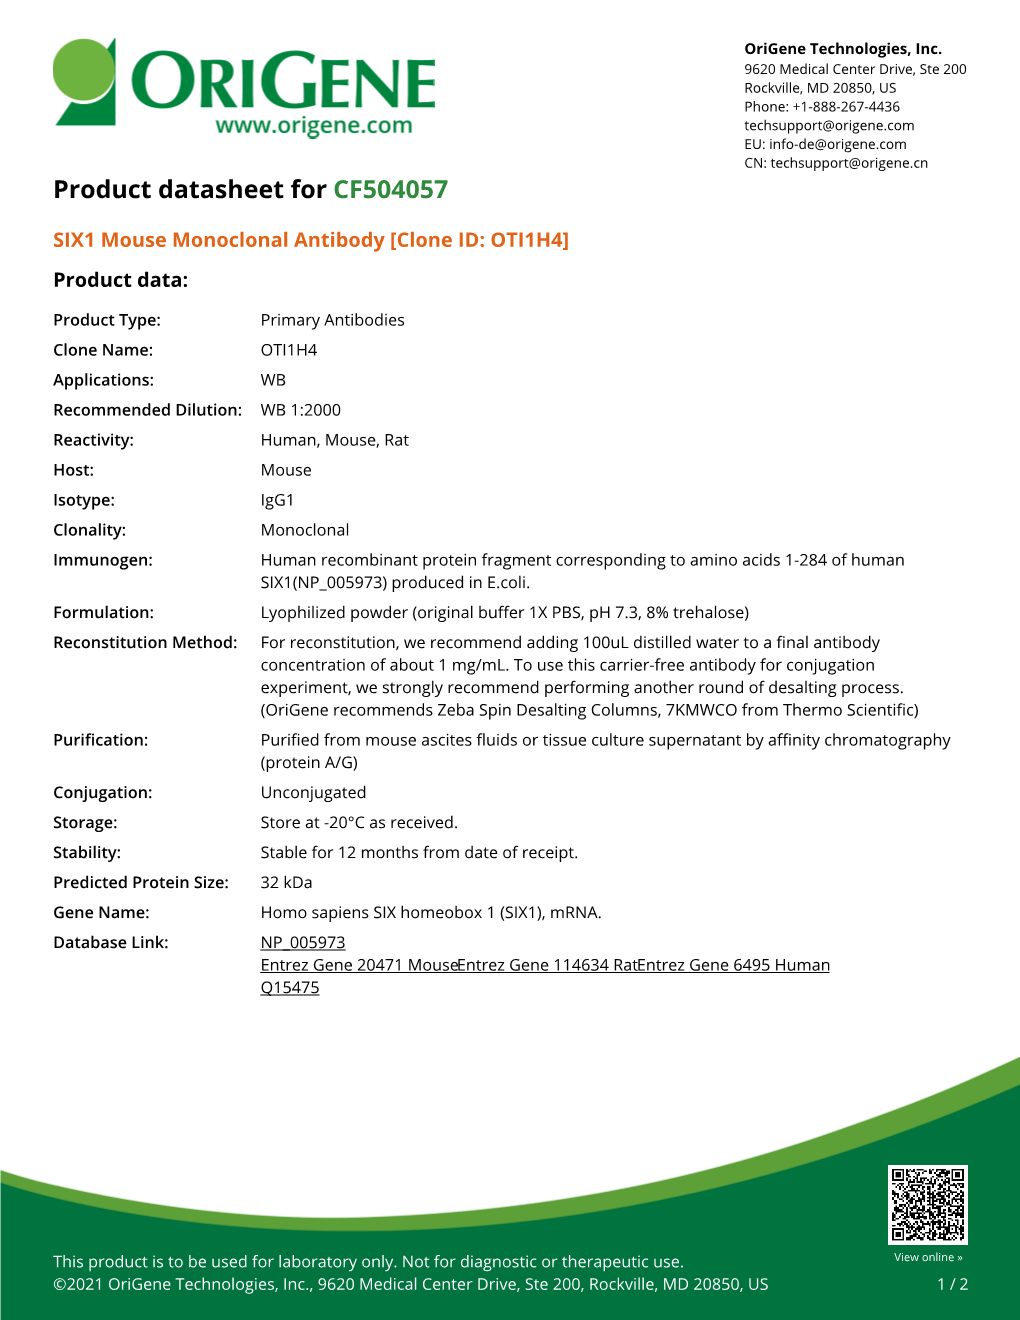 SIX1 Mouse Monoclonal Antibody [Clone ID: OTI1H4] Product Data